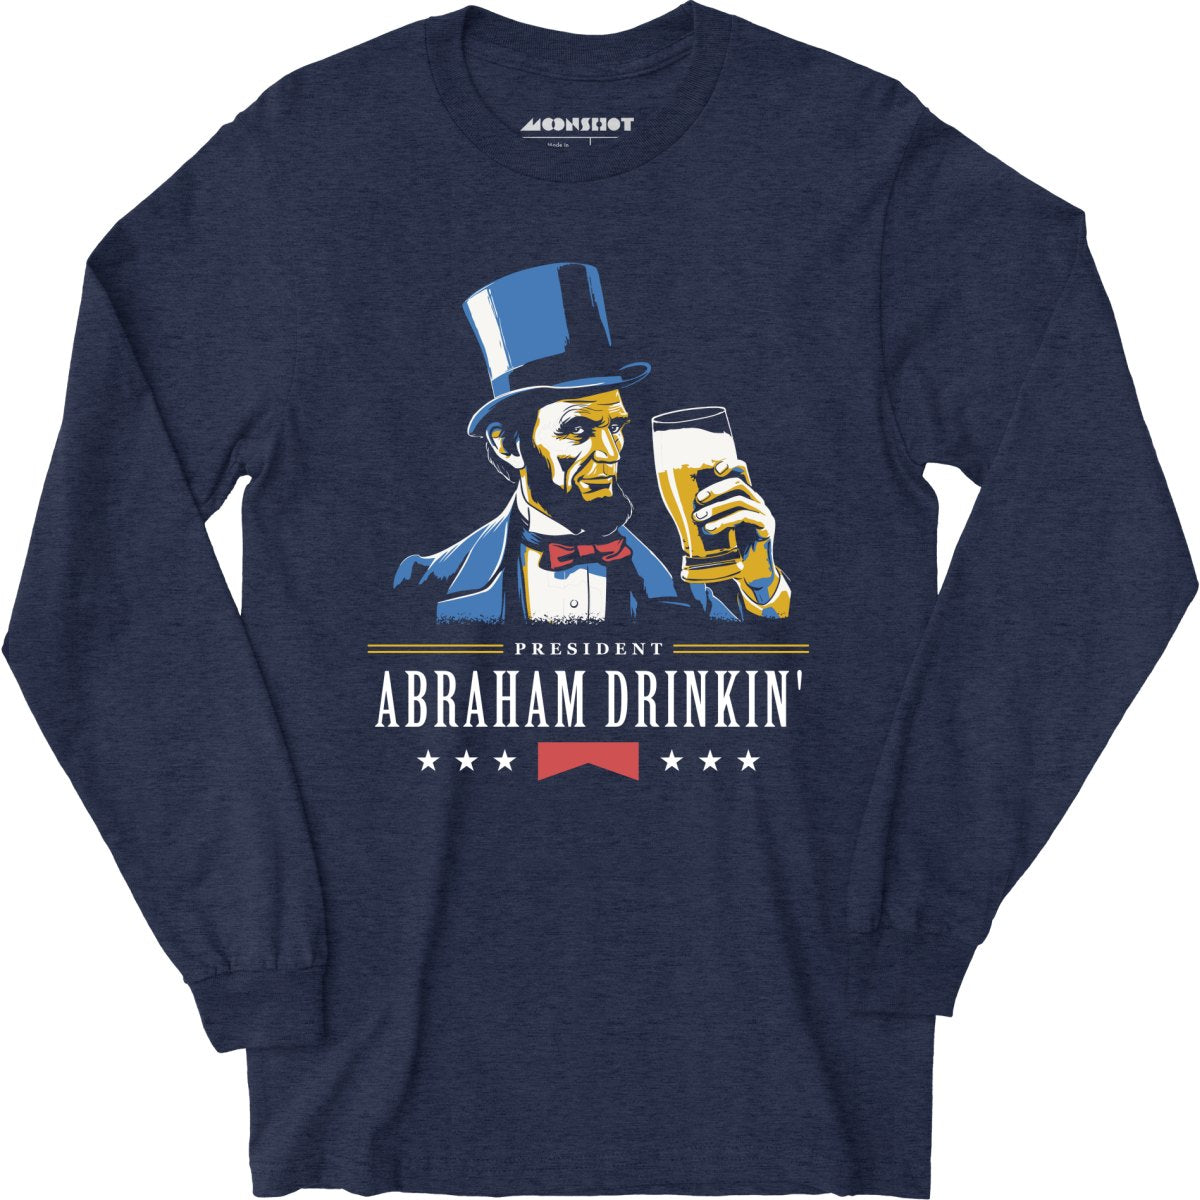 President Abraham Drinkin' - Long Sleeve T-Shirt